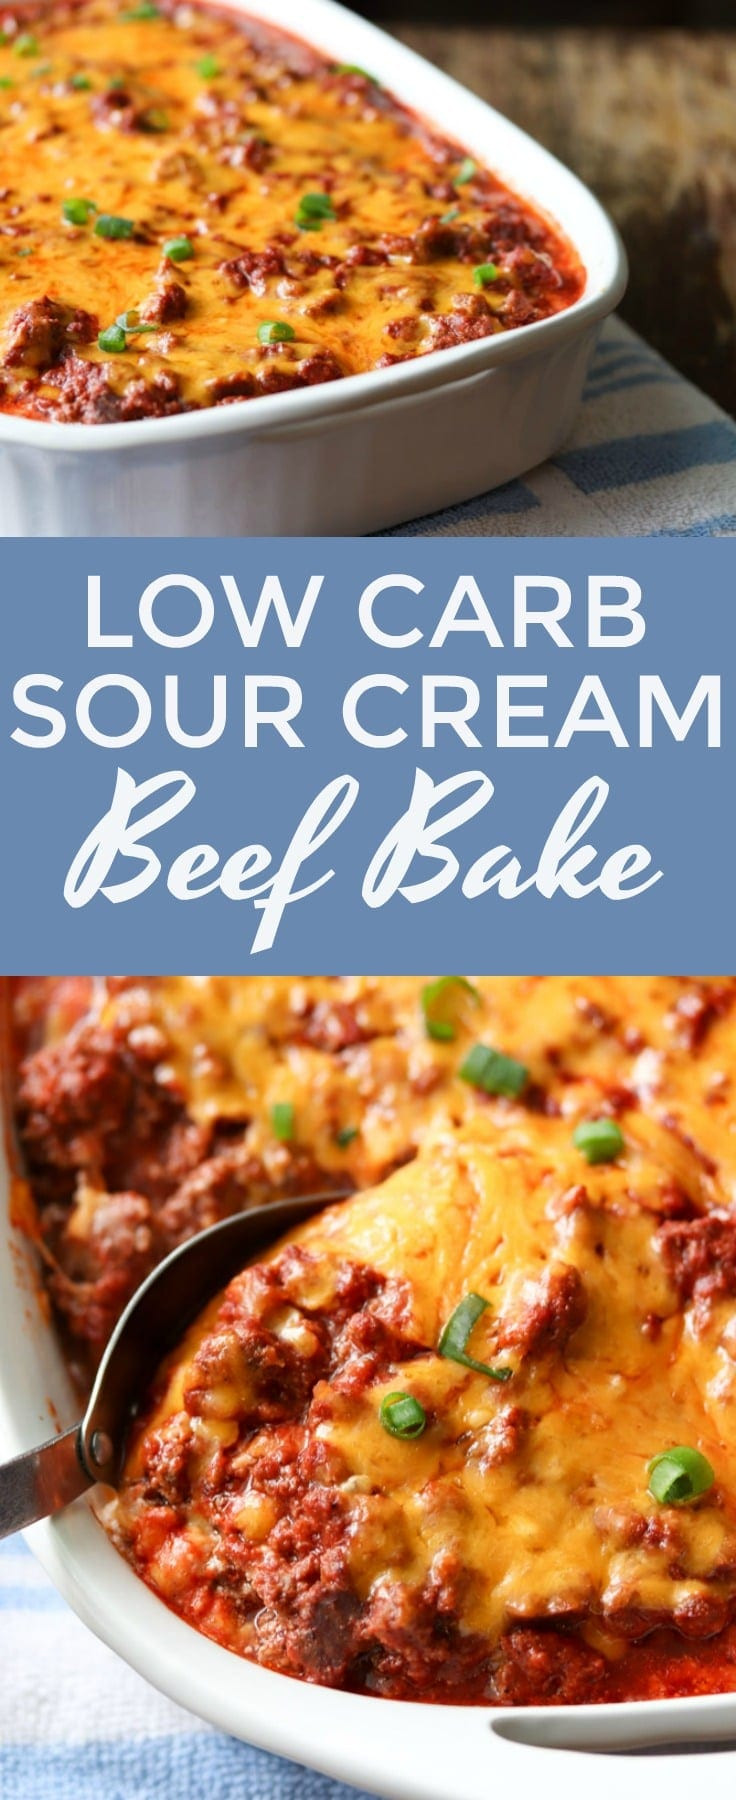 Low Carb Sour Cream Recipes
 Low Carb Sour Cream Beef Bake